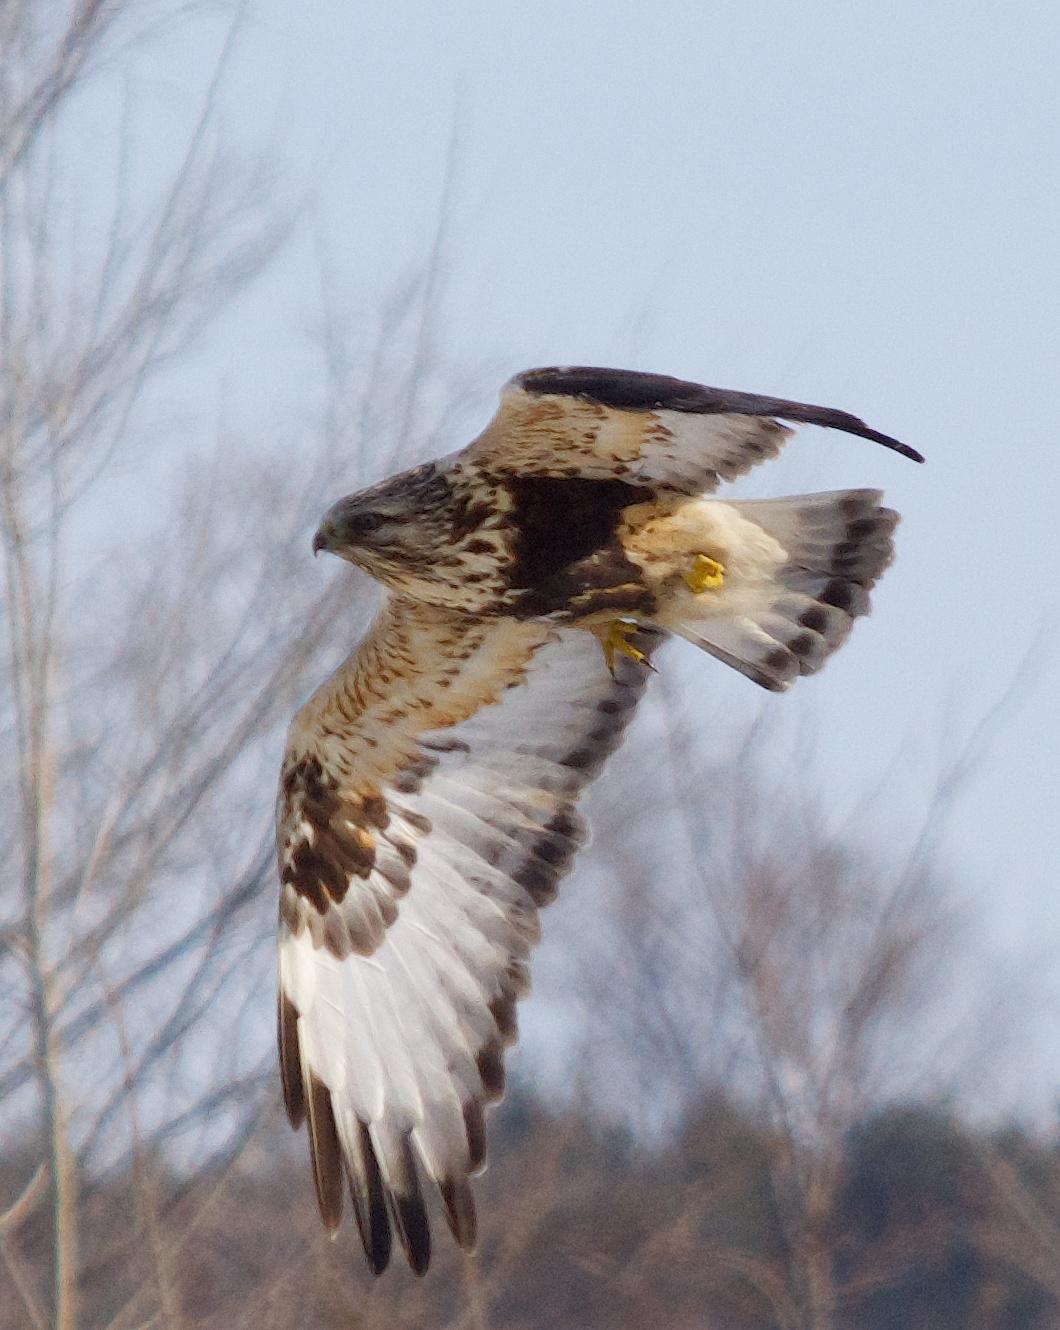 Rough-legged Hawk Photo by Gerald Hoekstra